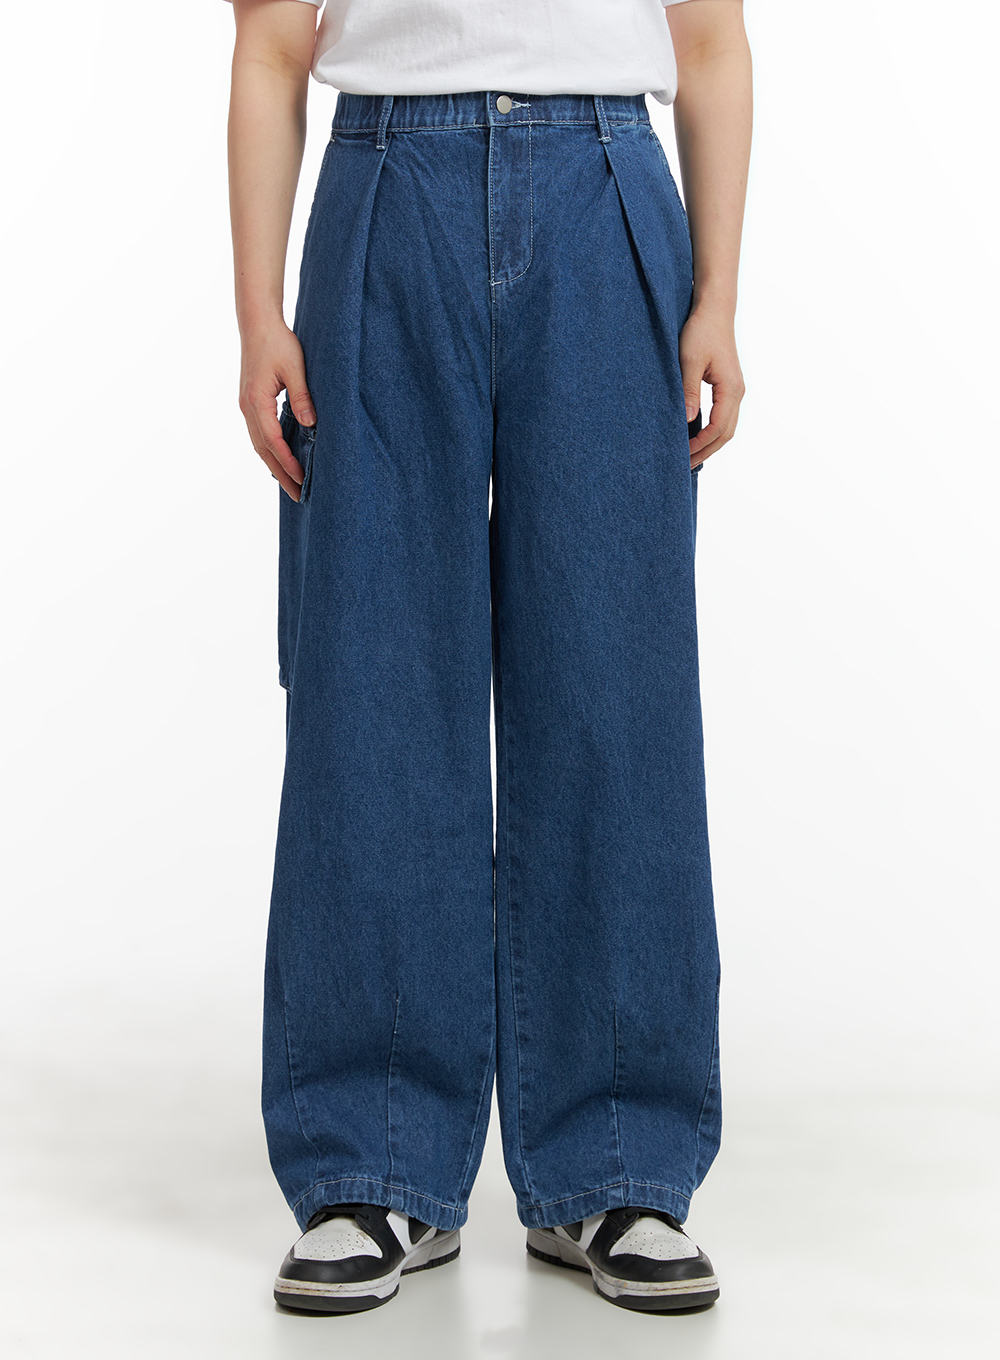 mens-wide-fit-cargo-jeans-ia402 / Dark blue